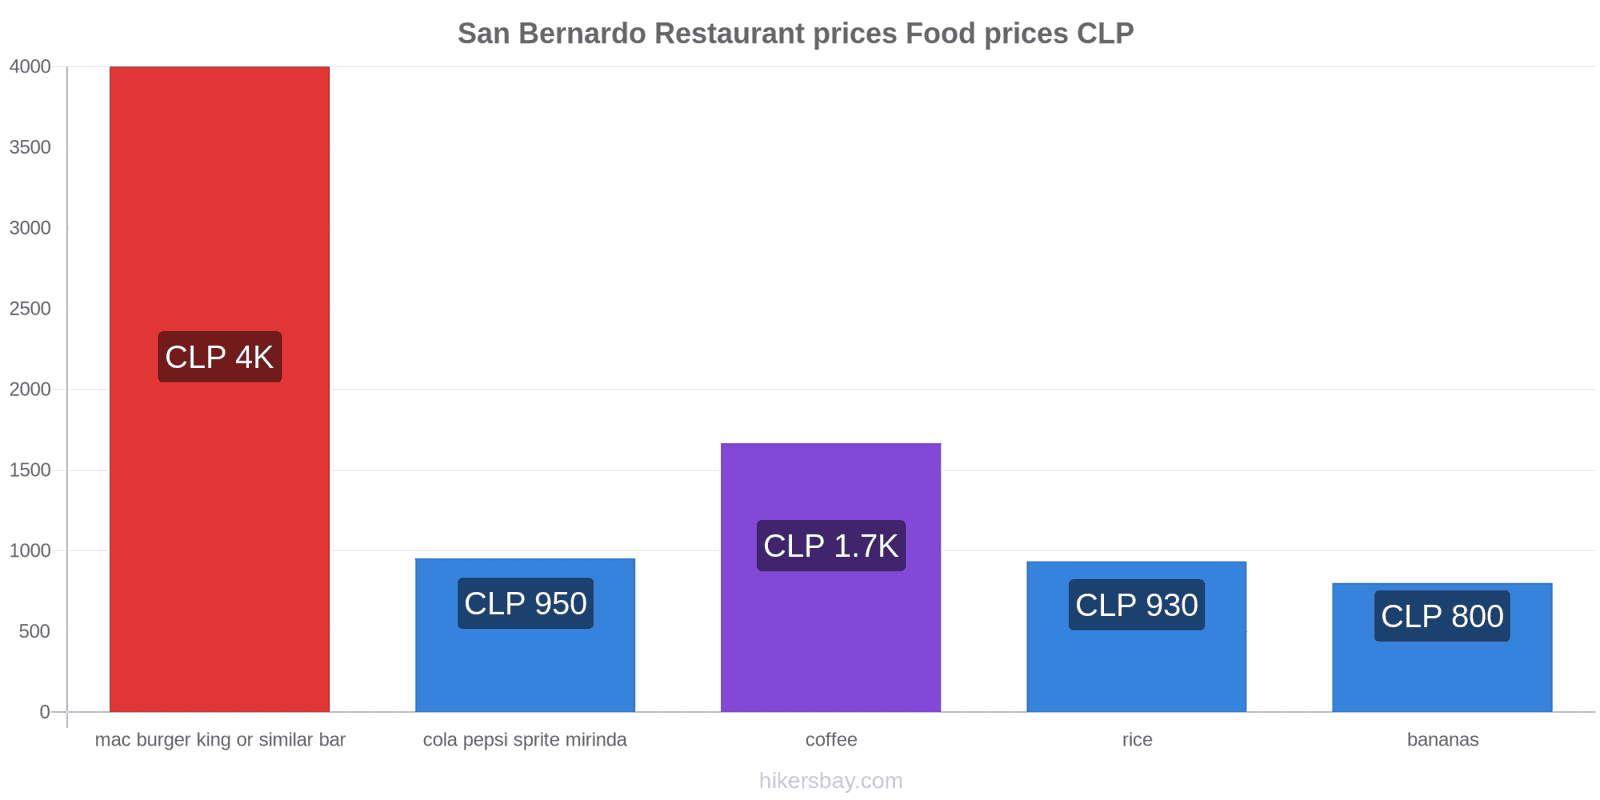 San Bernardo price changes hikersbay.com